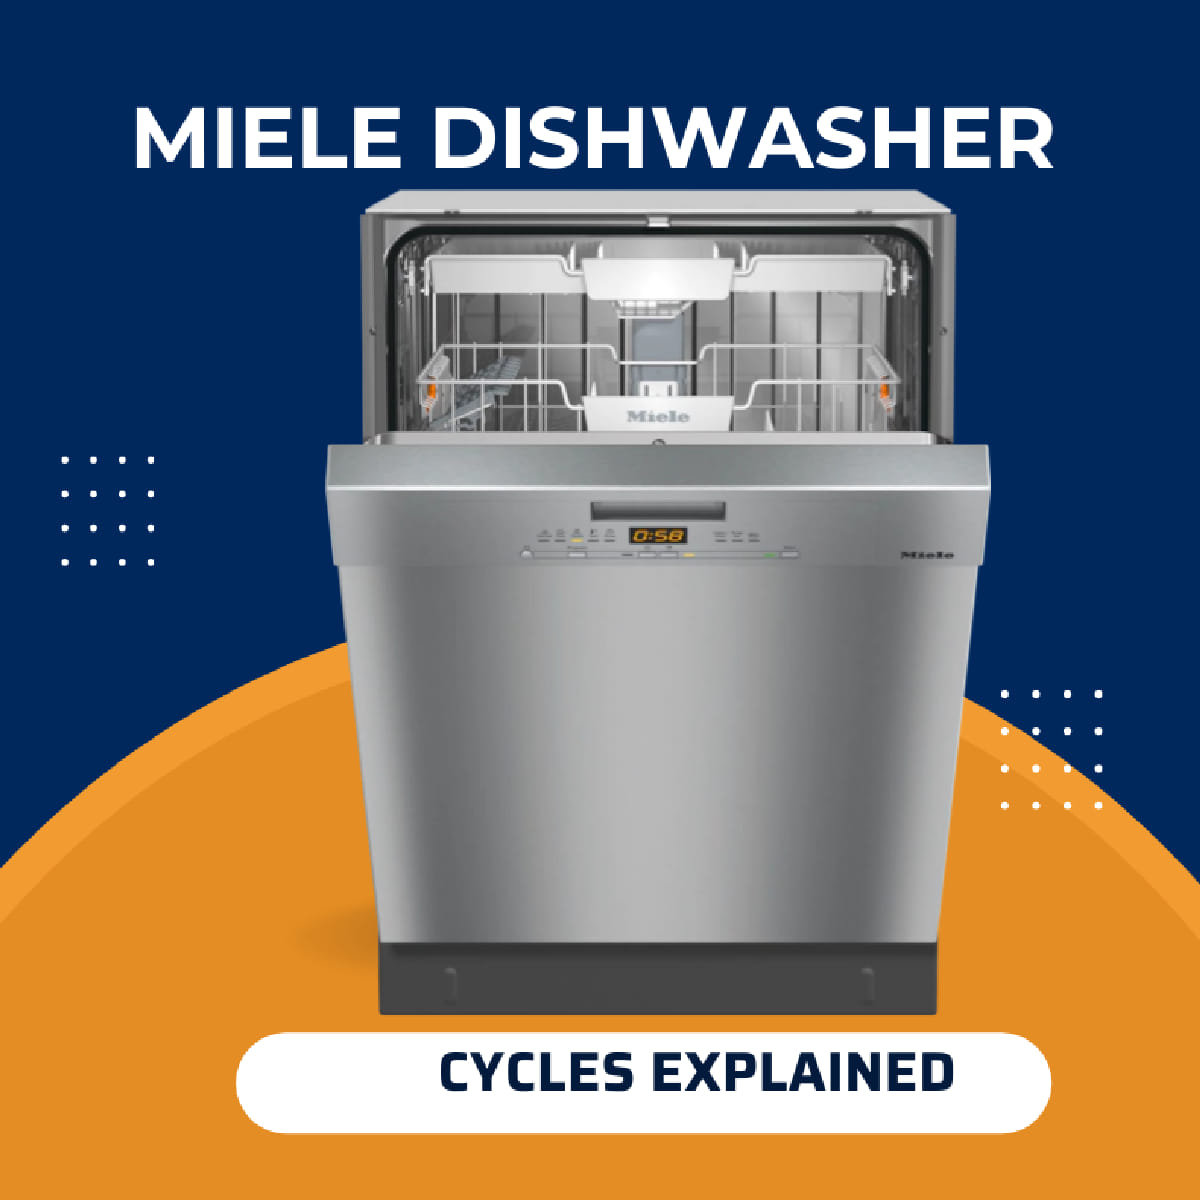 Miele dishwasher cycles explained